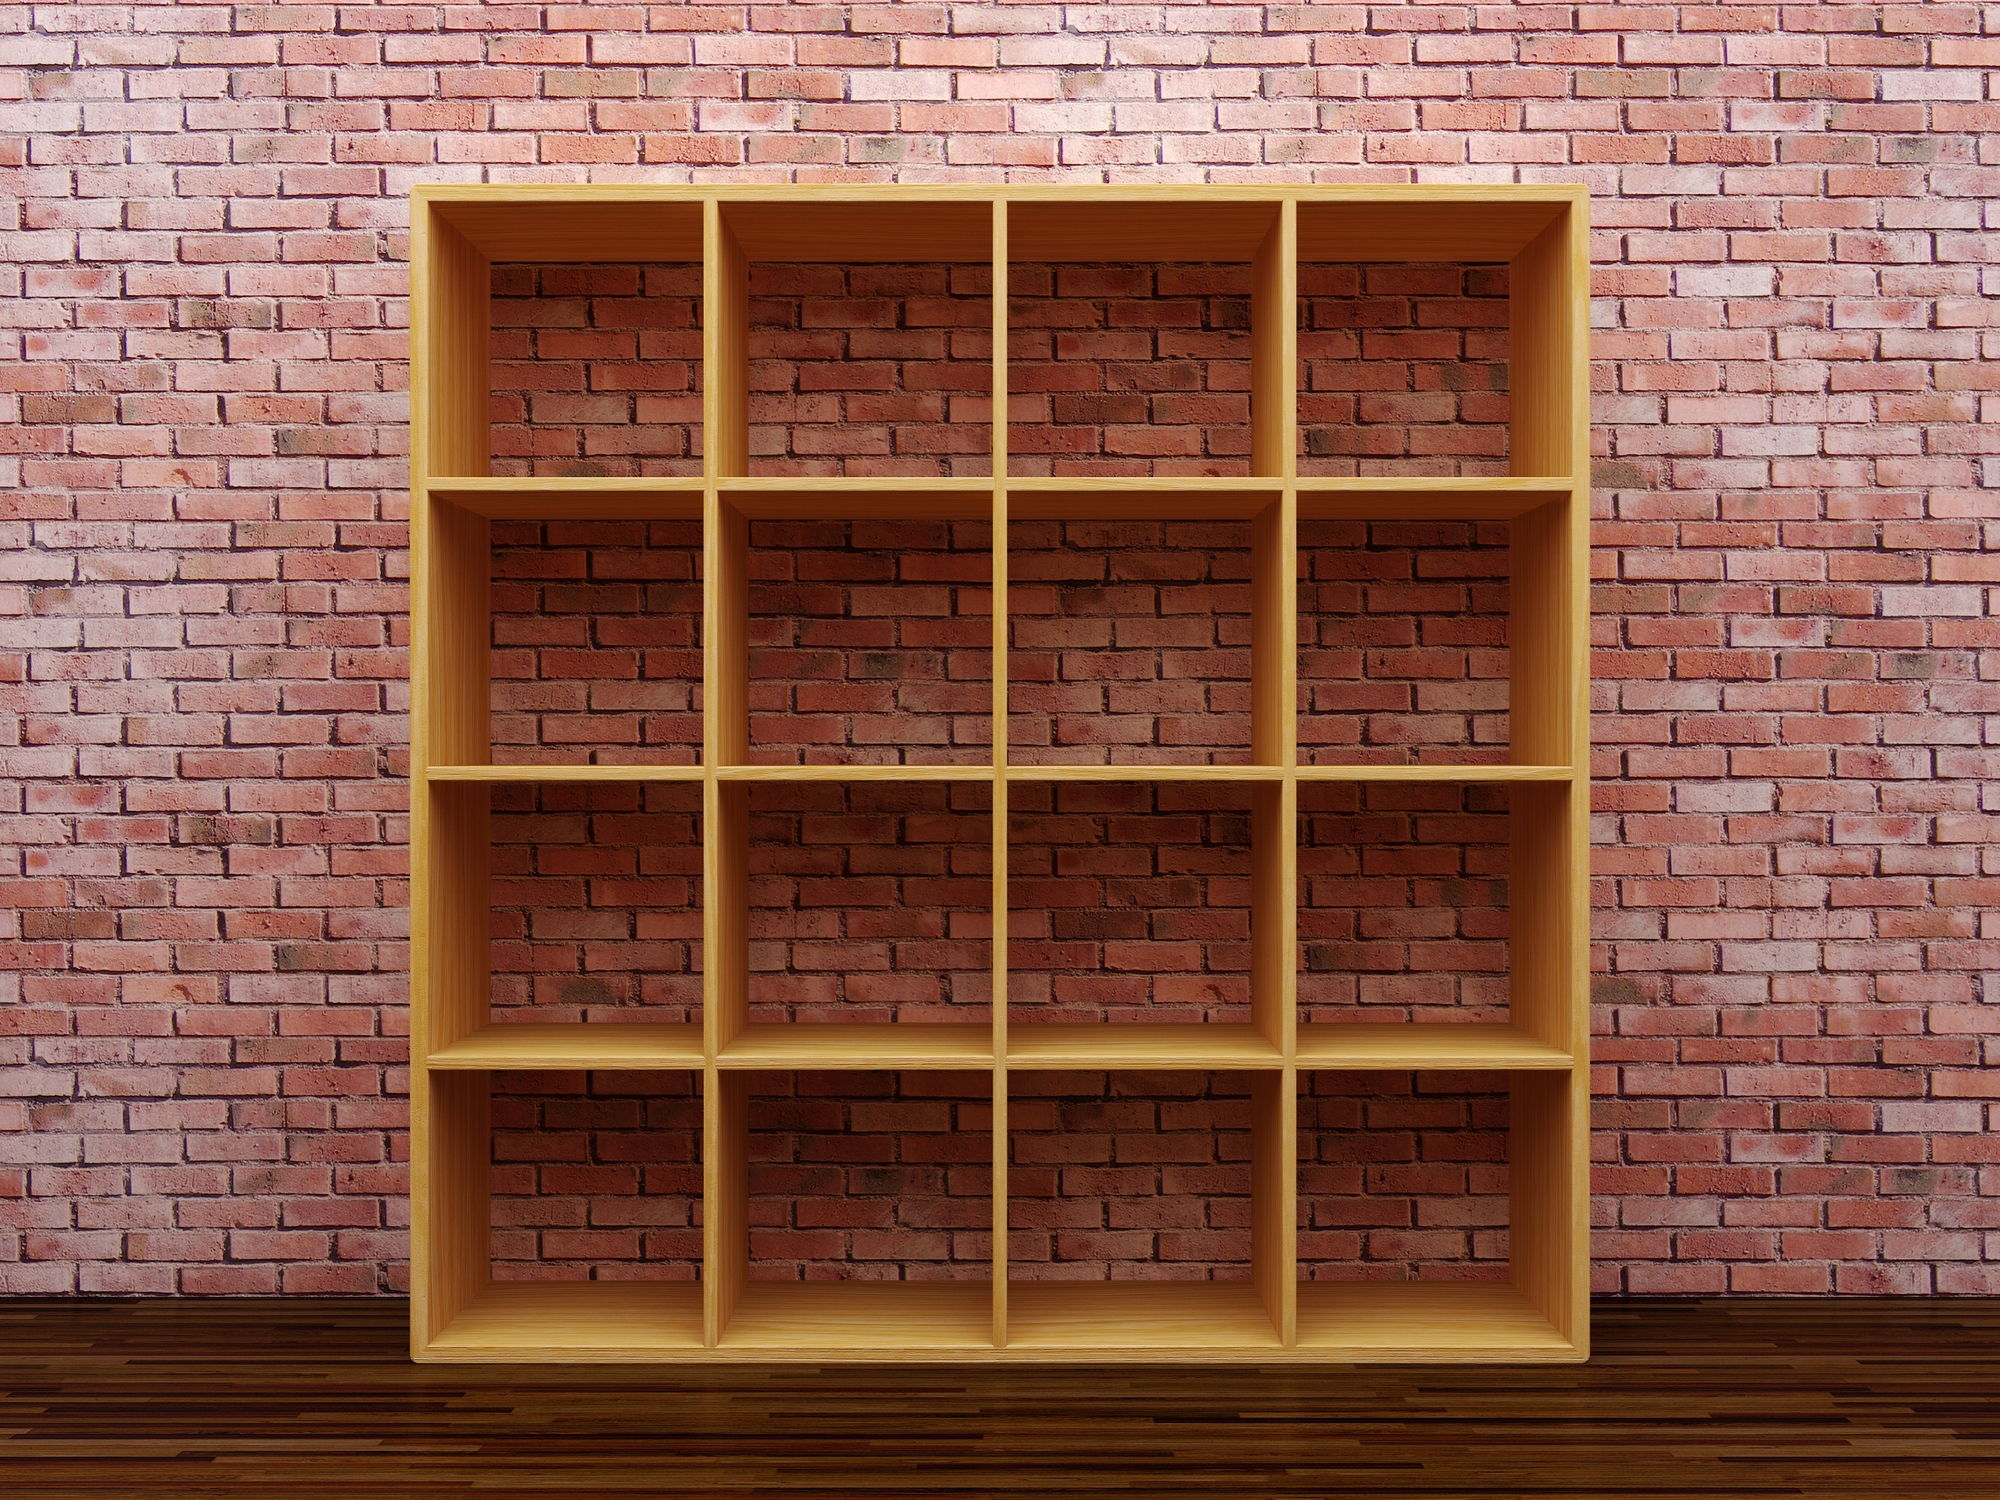 empty bookshelf against brick wall